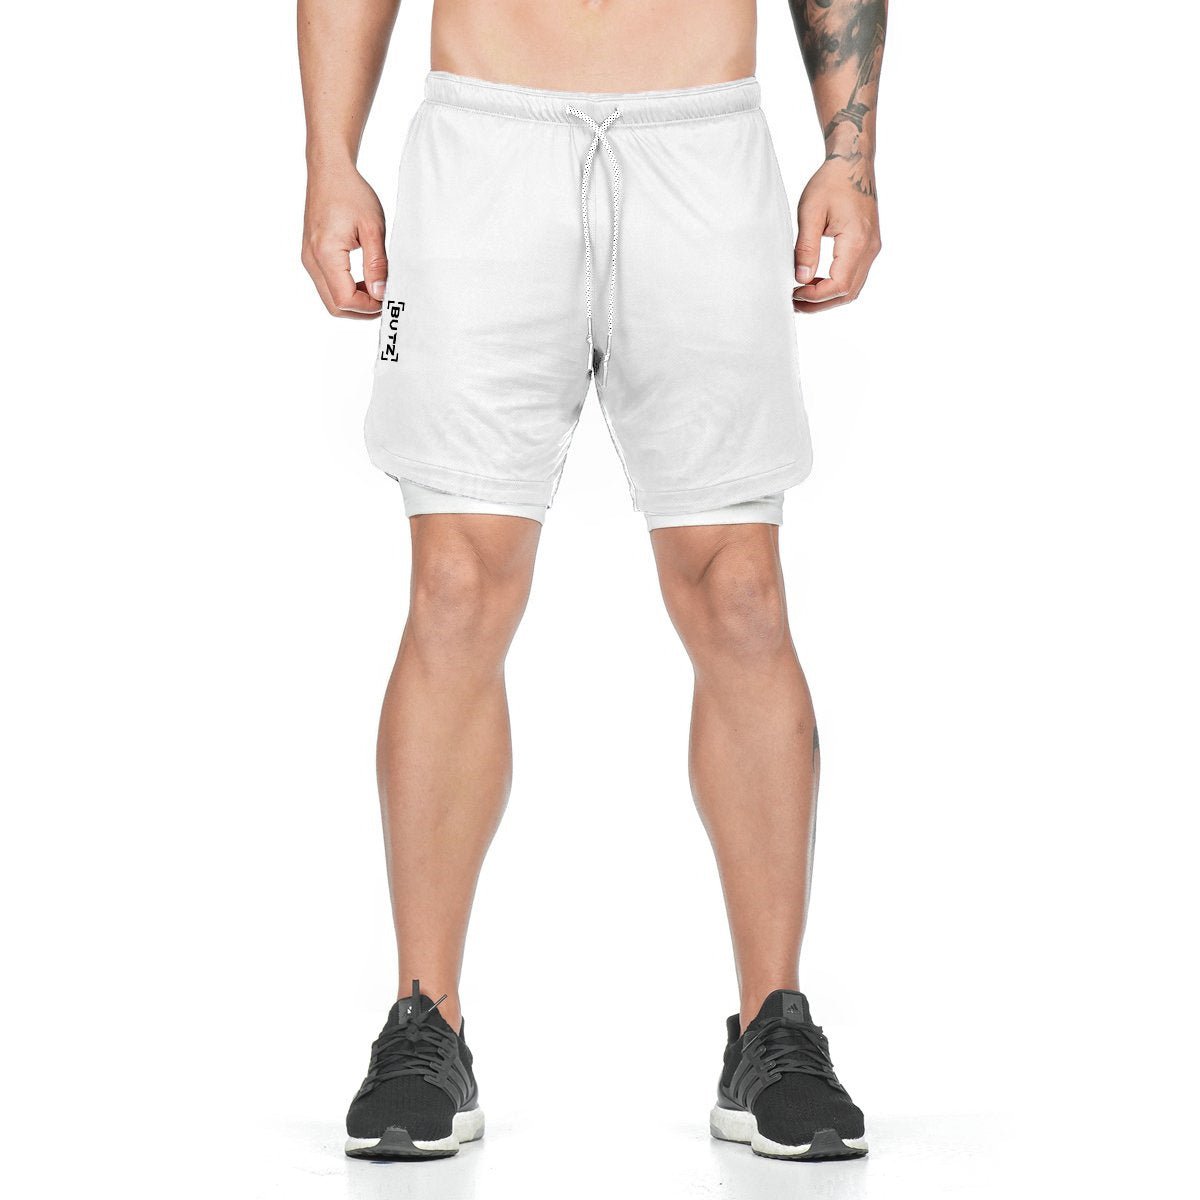 Men's Pocket Compression Shorts - SunneySteveMen's Pocket Compression ShortsMen's clothingSunneySteveSunneySteveCJNSXZDK00402-White White-2XL